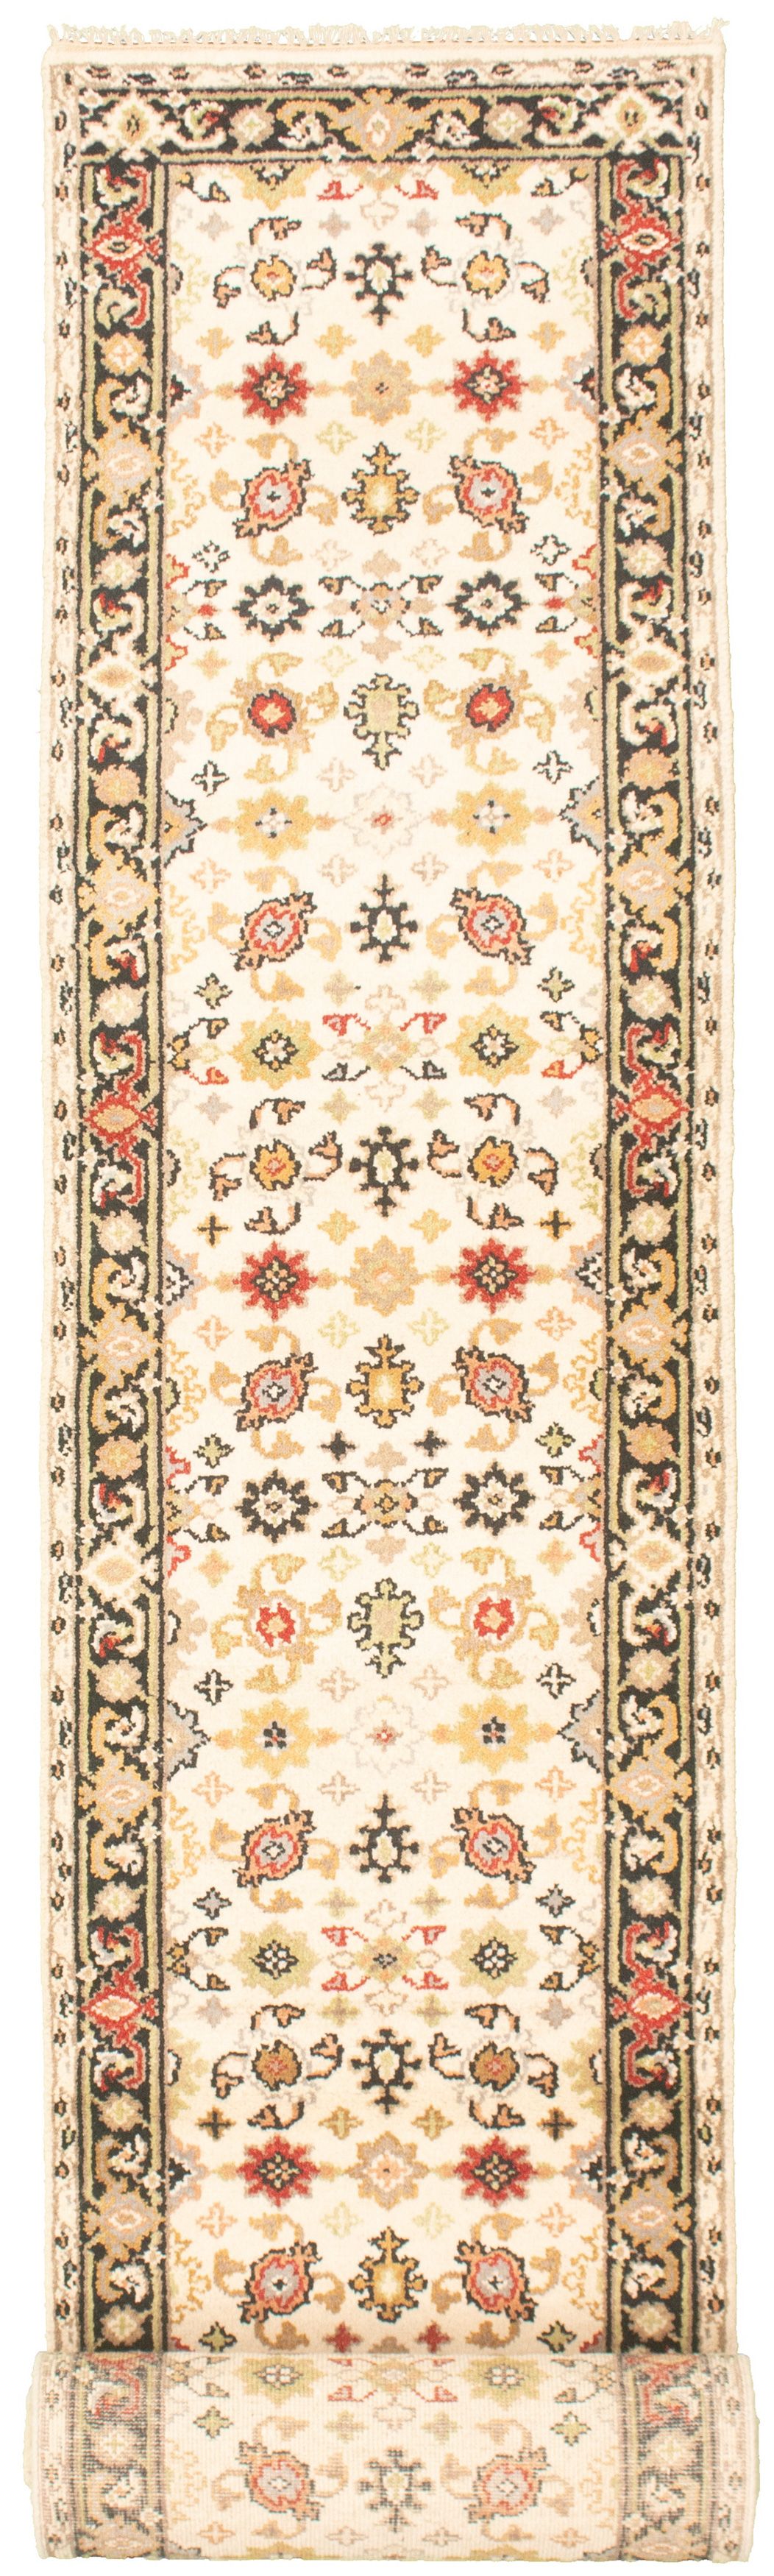 Hand-knotted Serapi Heritage III Cream Wool Rug 2'6" x 19'9" Size: 2'6" x 19'9"  